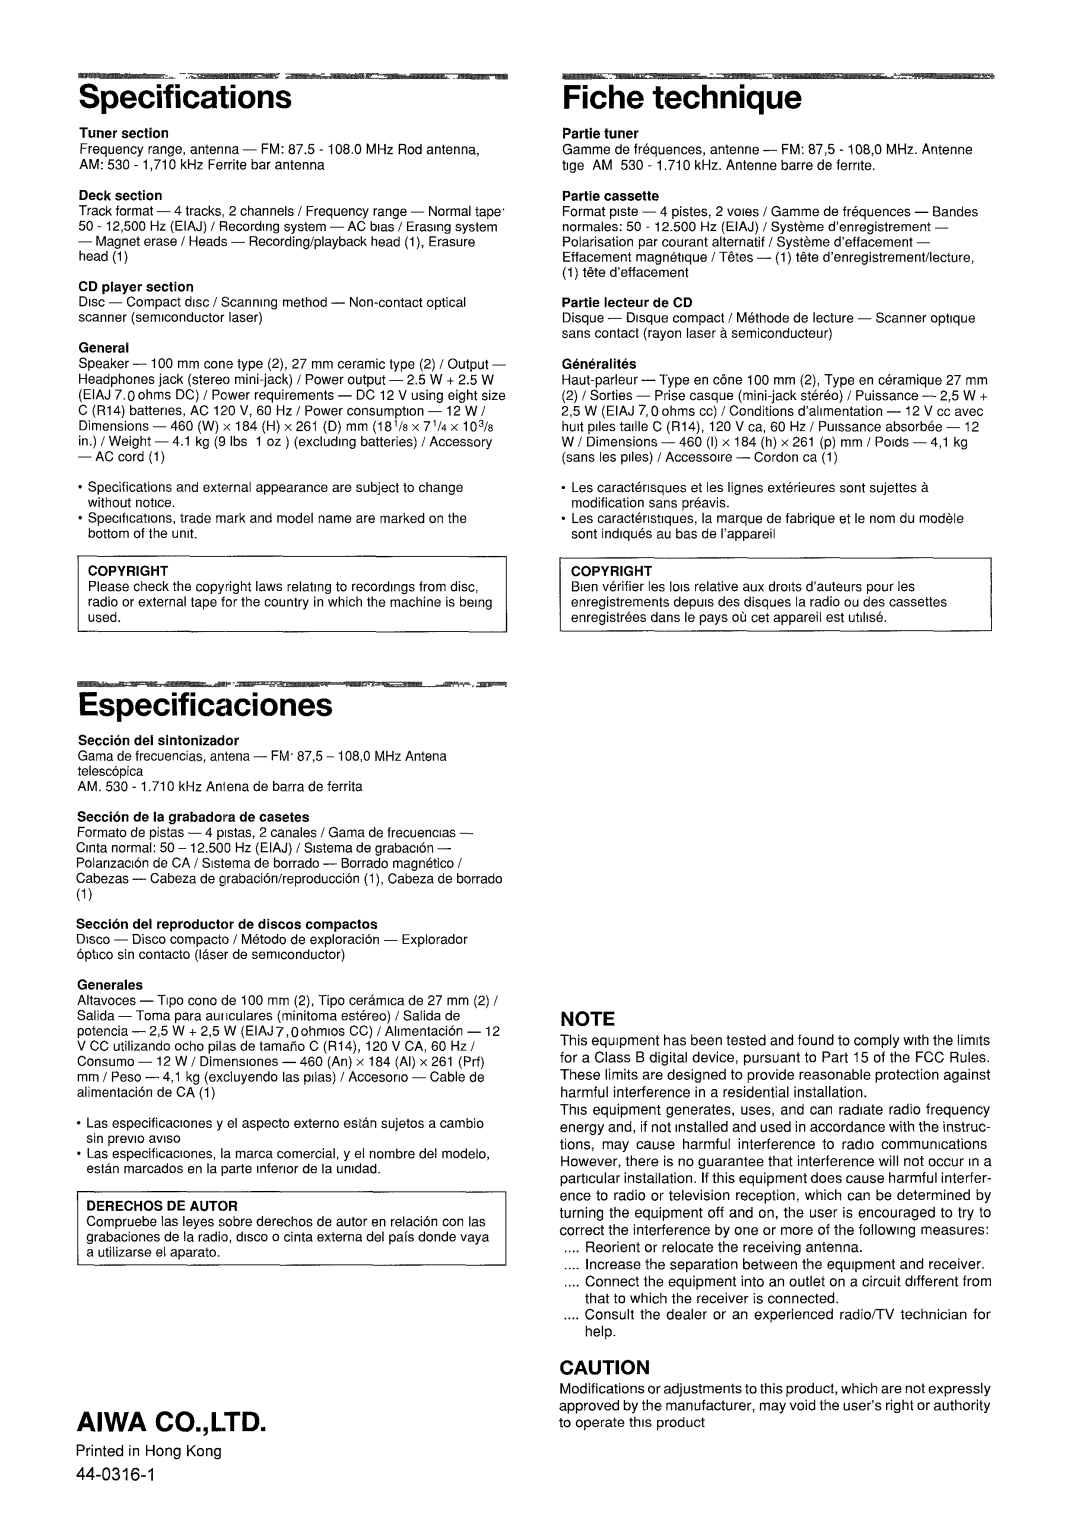 Aiwa CSD-ES365 Specifications, Fiche technique, Especificzciones, 44-0316-1, Partie tuner, Aiwa Co., L.Td, Tuner section 